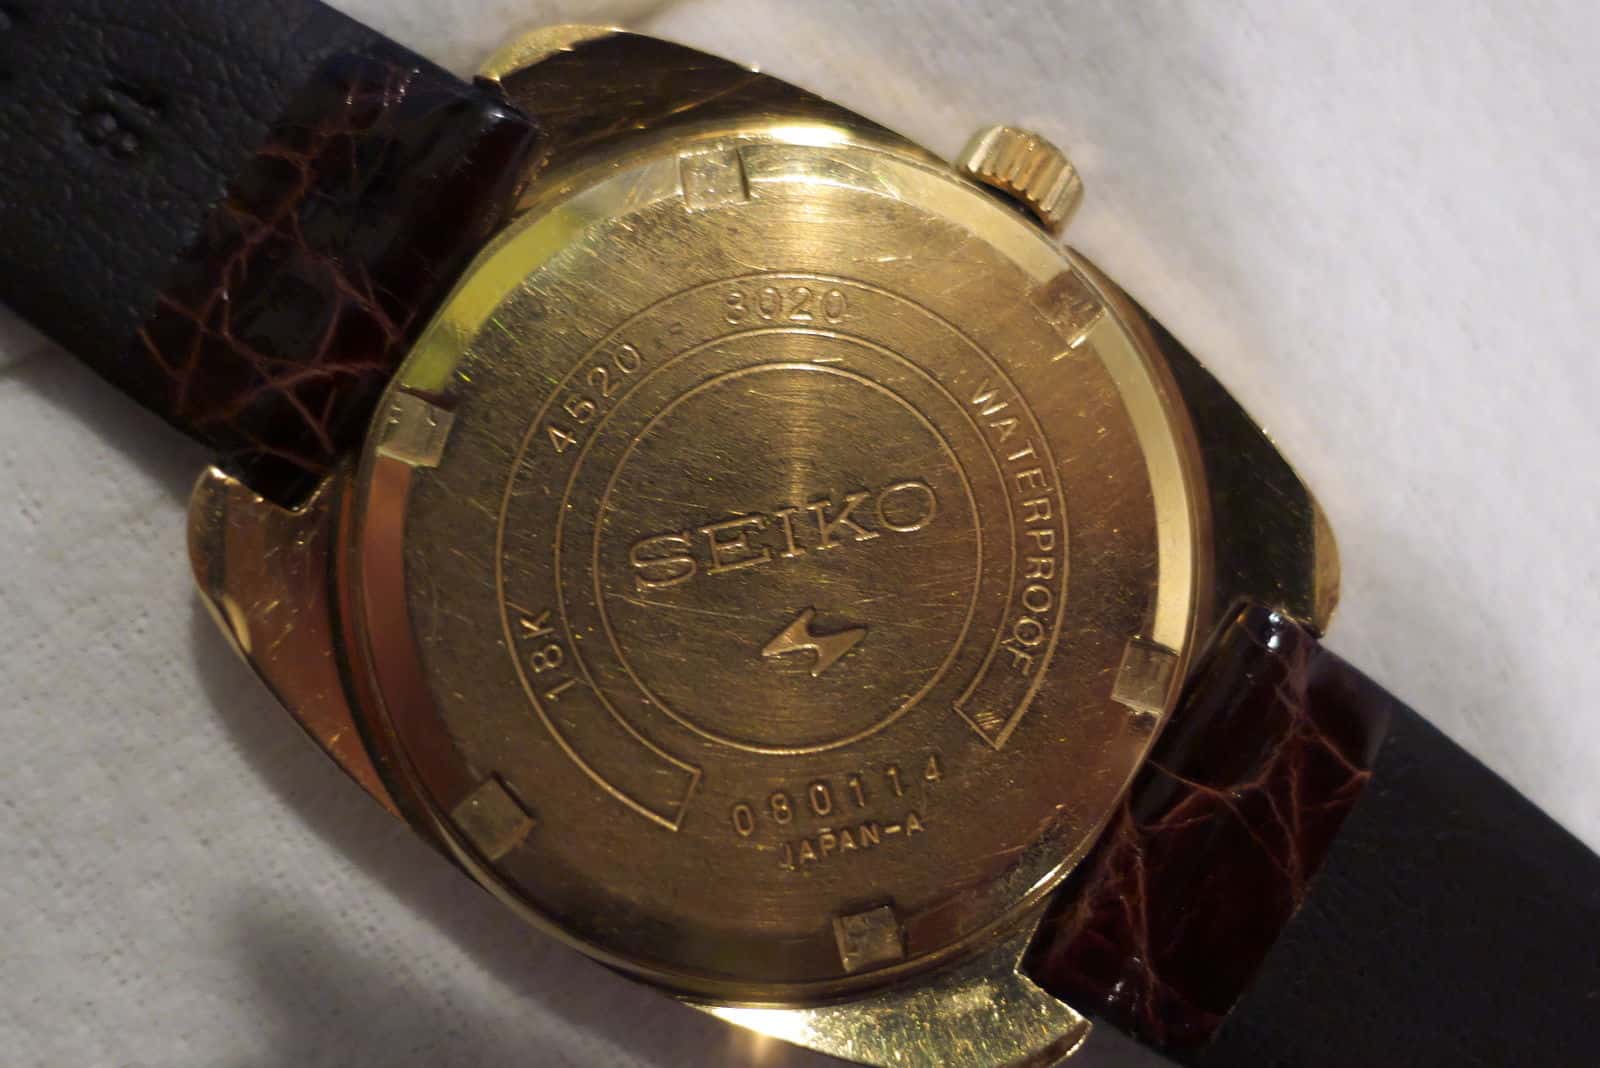  • View topic - 1968 Seiko Astronomical Observatory  Chronometer!